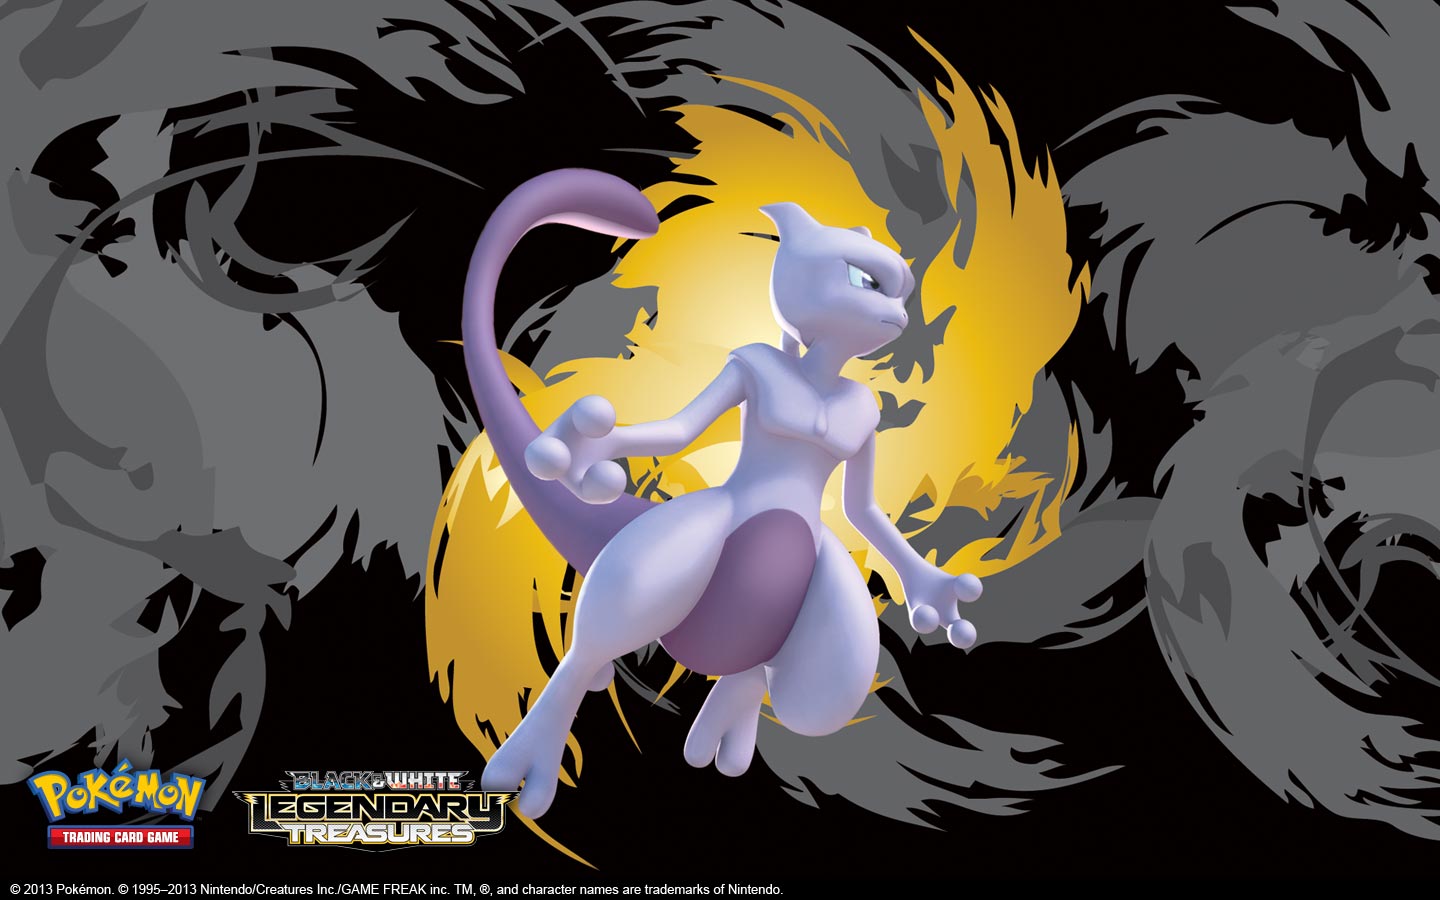 The Official Pokémon Website | Pokemon.com